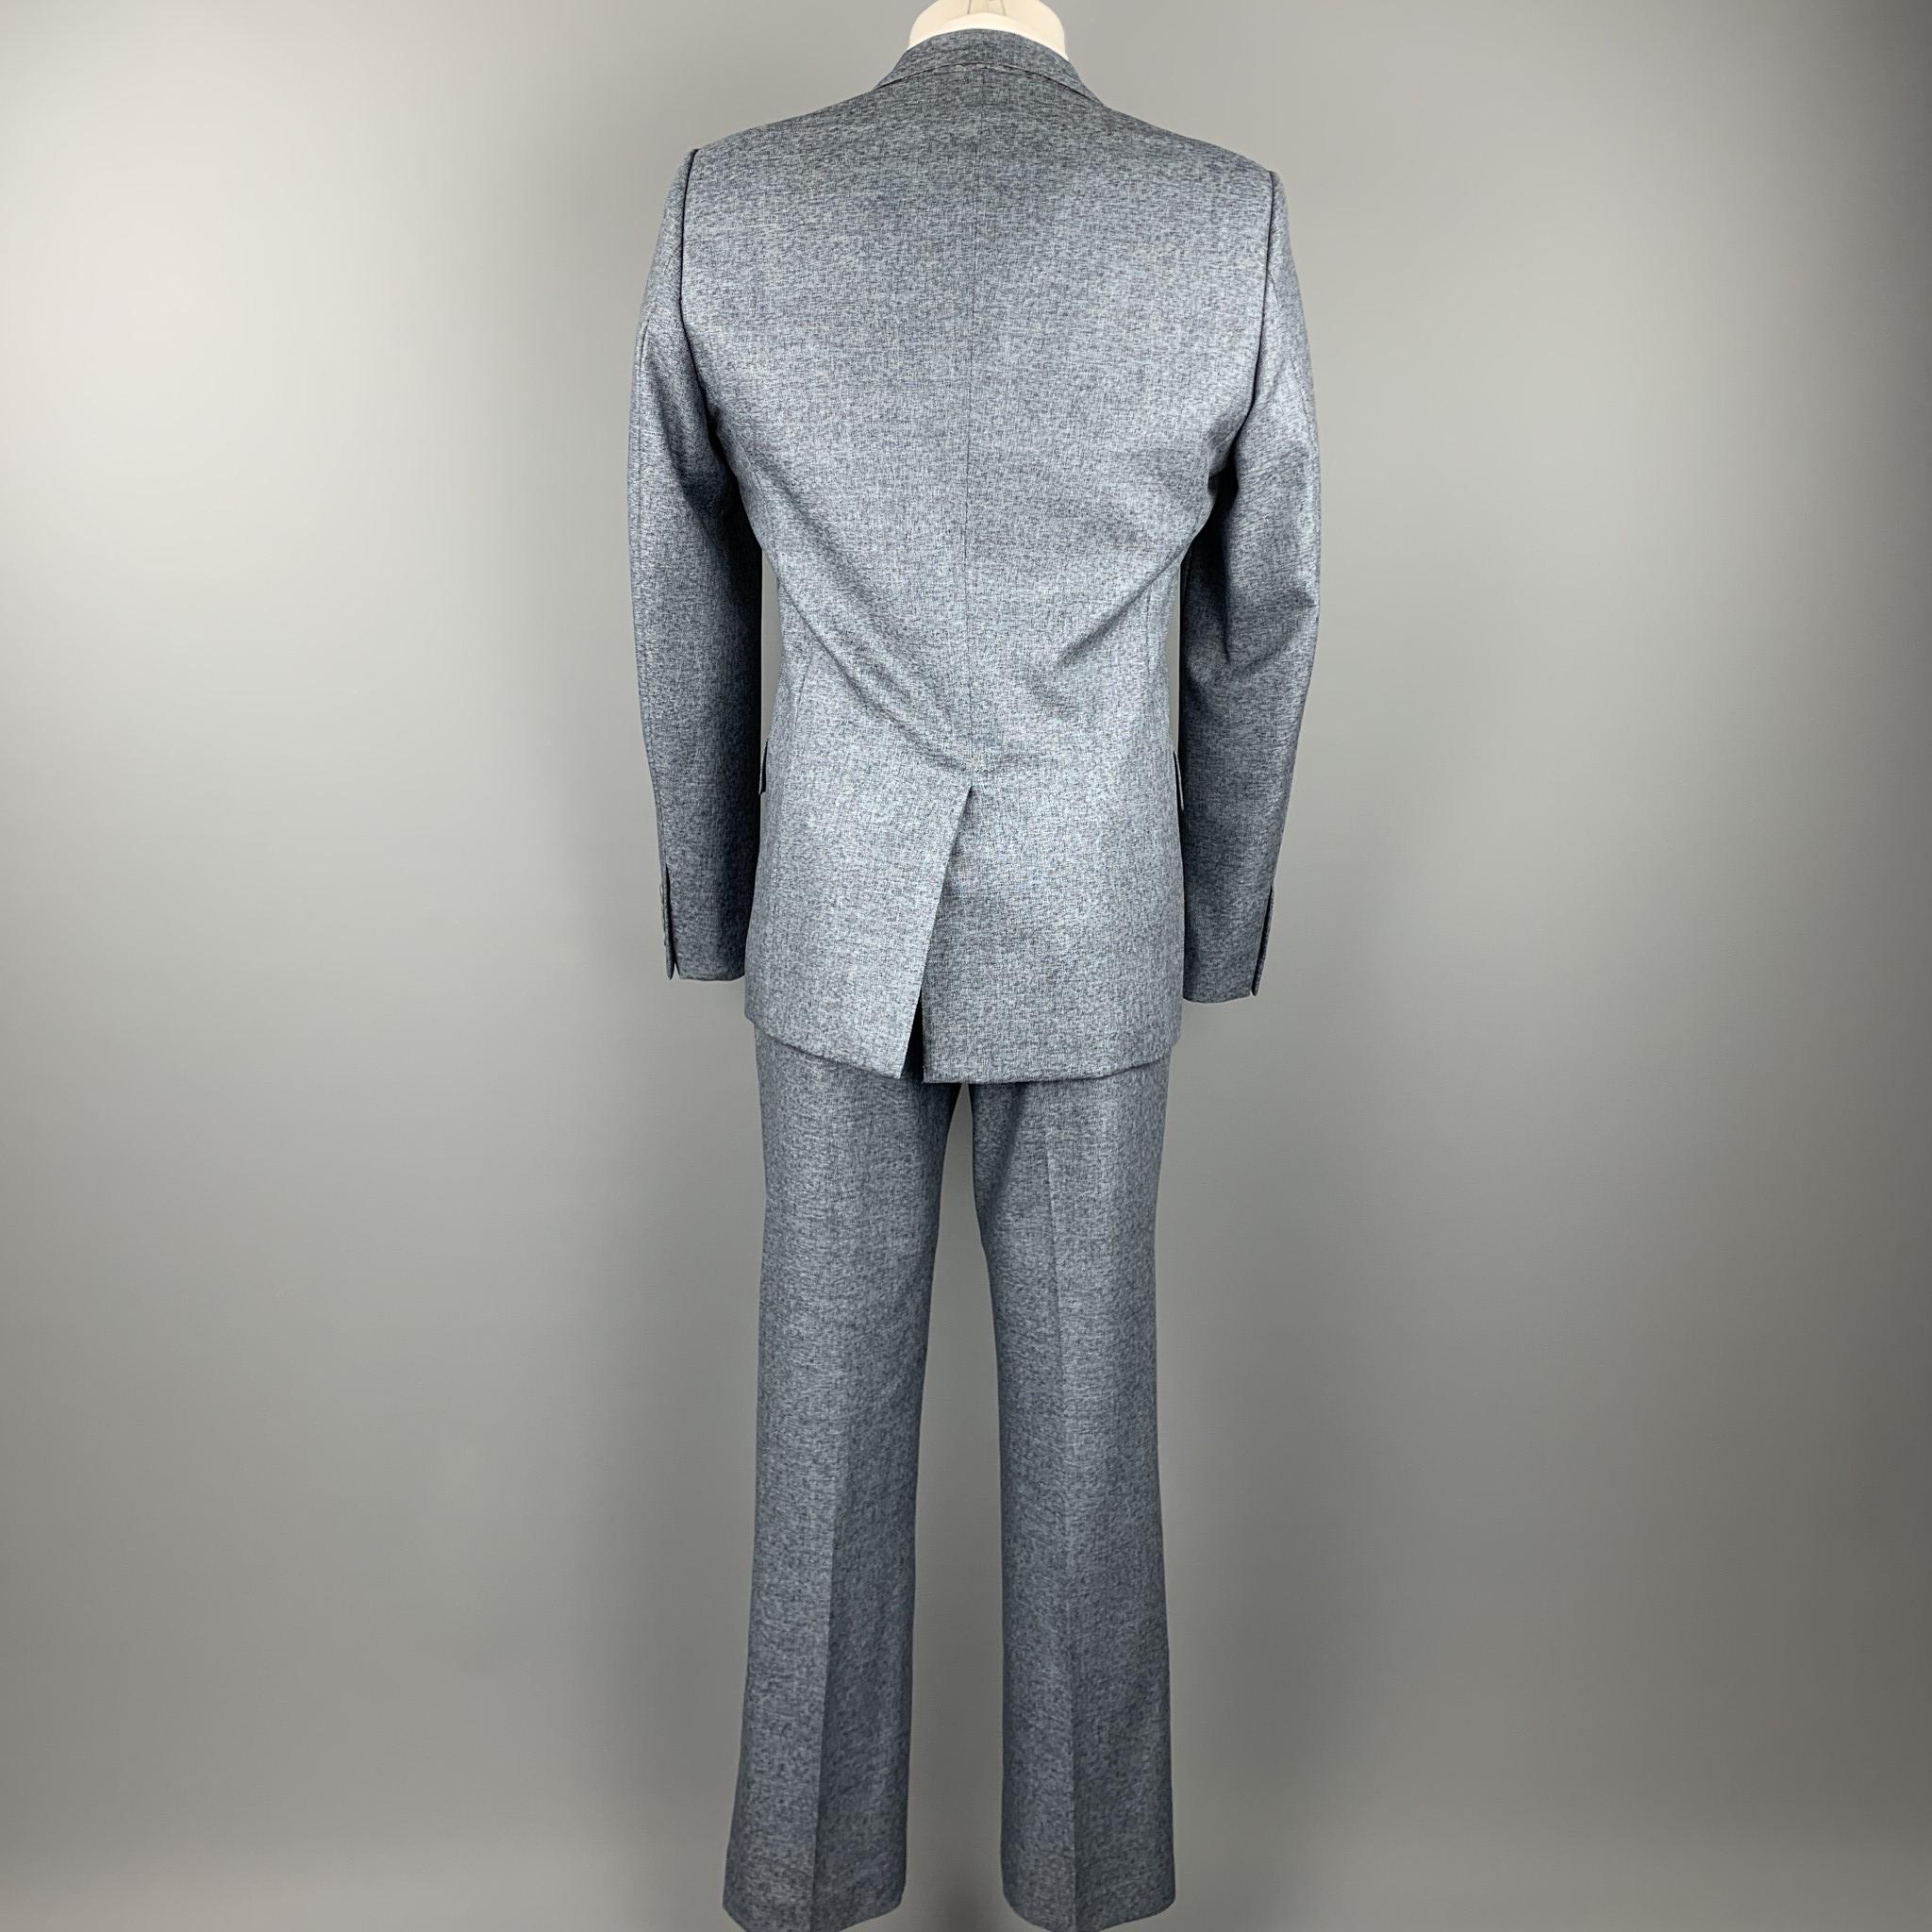 heather blue suit